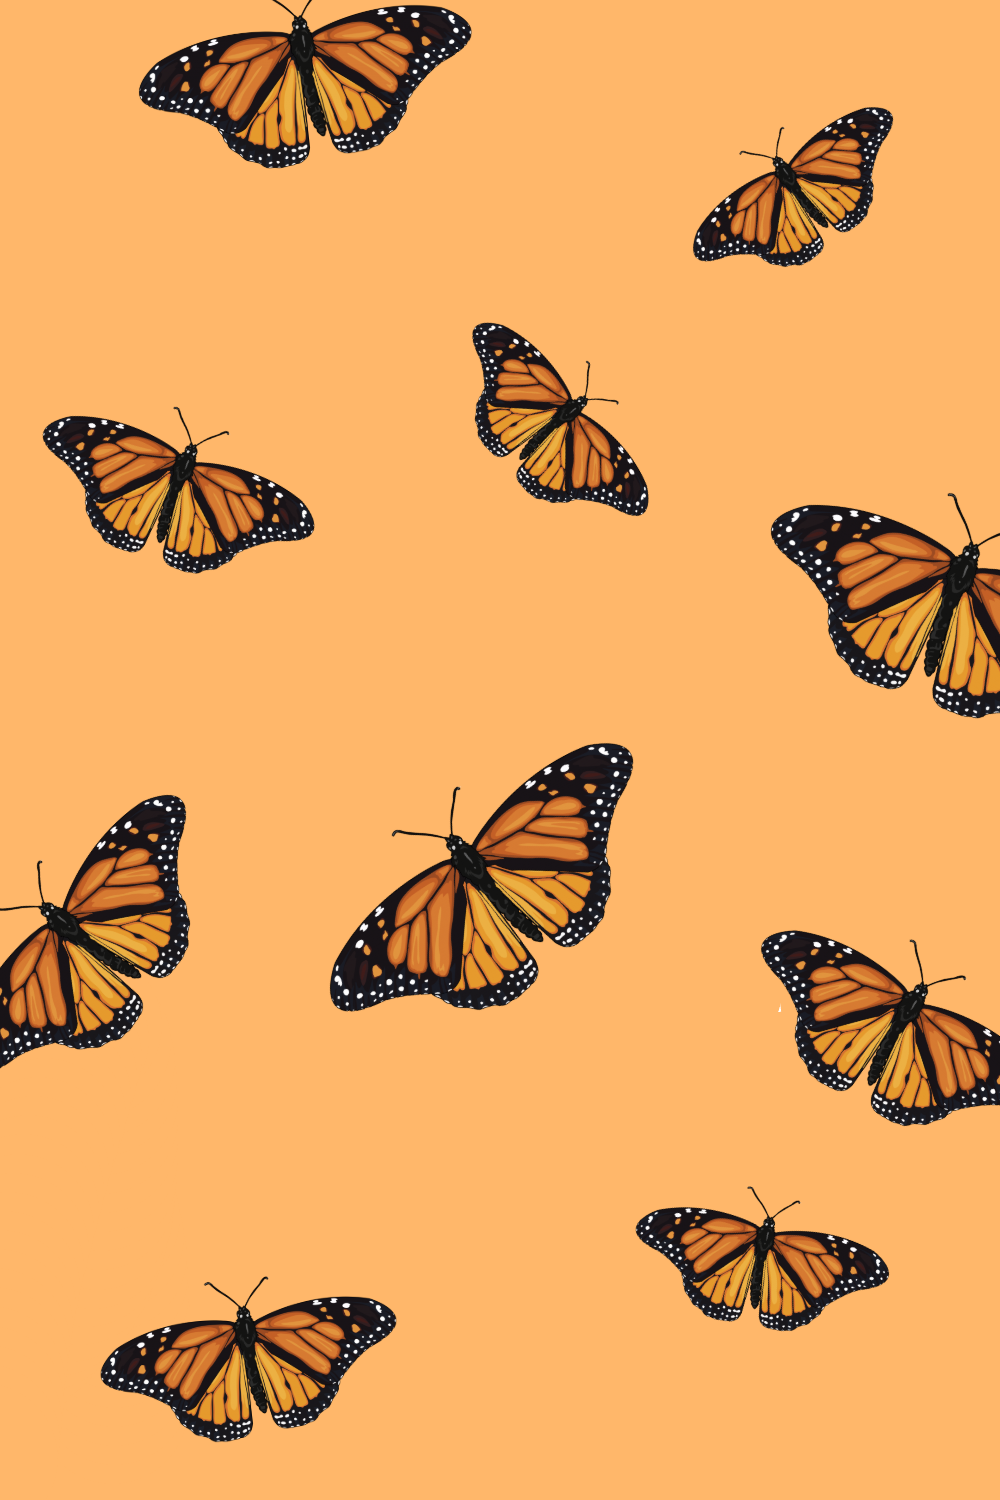 Butterfly Aesthetic Desktop Wallpapers  Top Free Butterfly Aesthetic  Desktop Backgrounds  WallpaperAccess